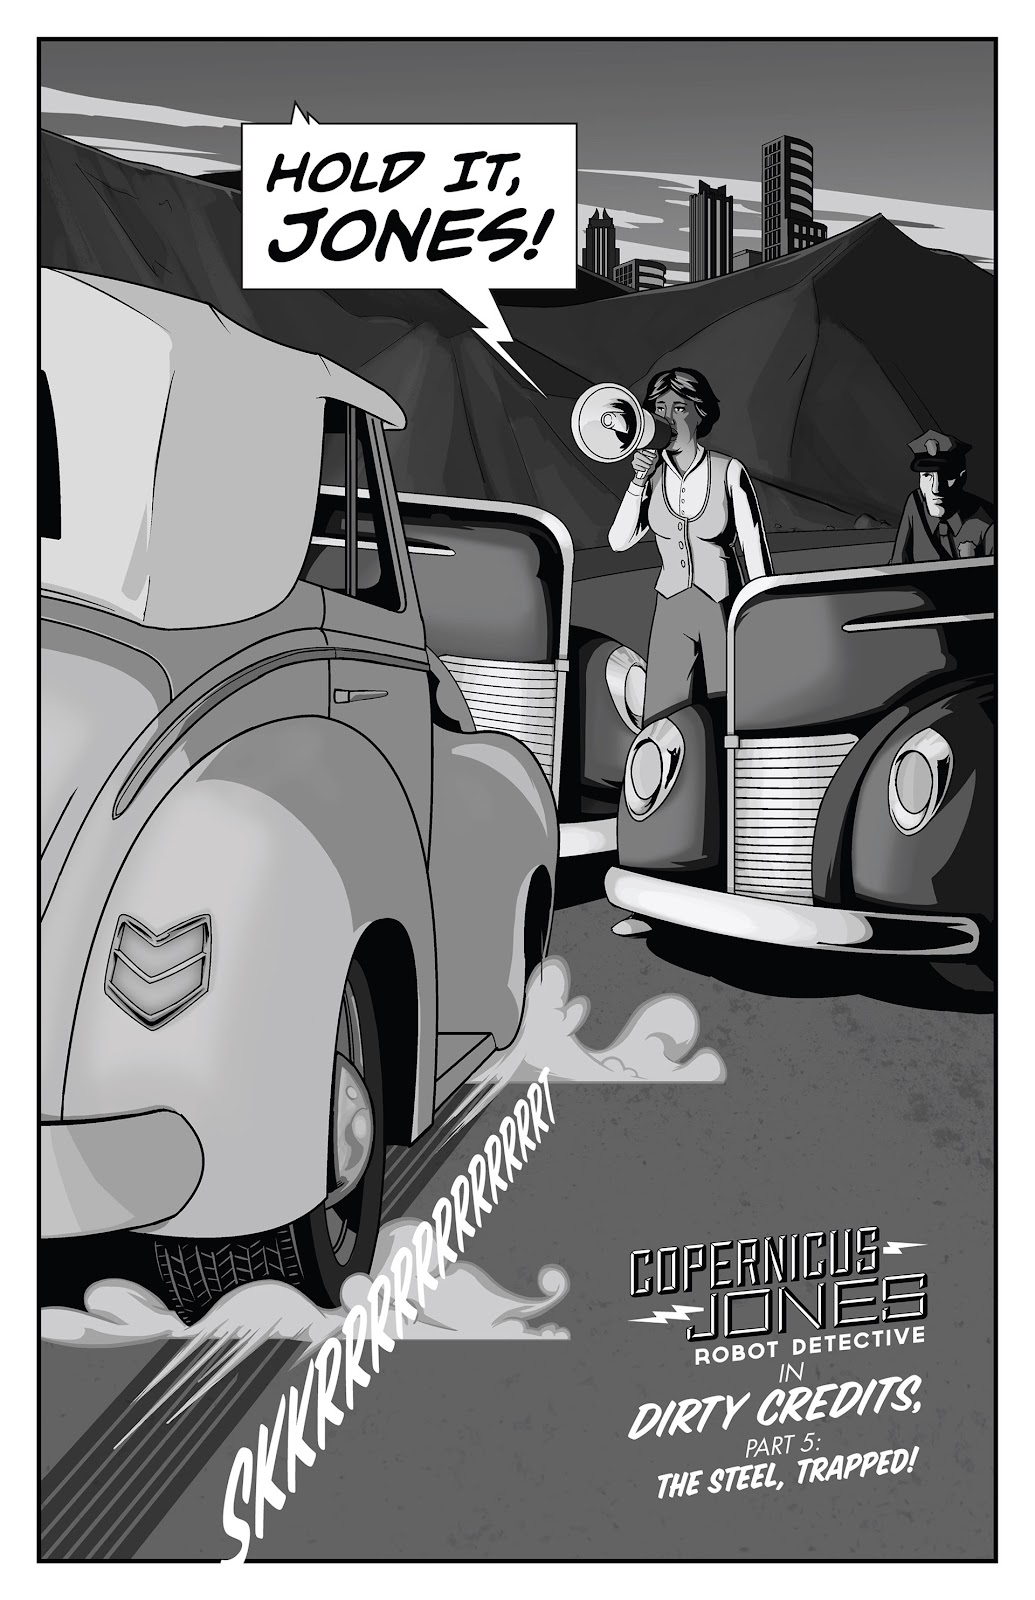 Copernicus Jones: Robot Detective issue 5 - Page 6